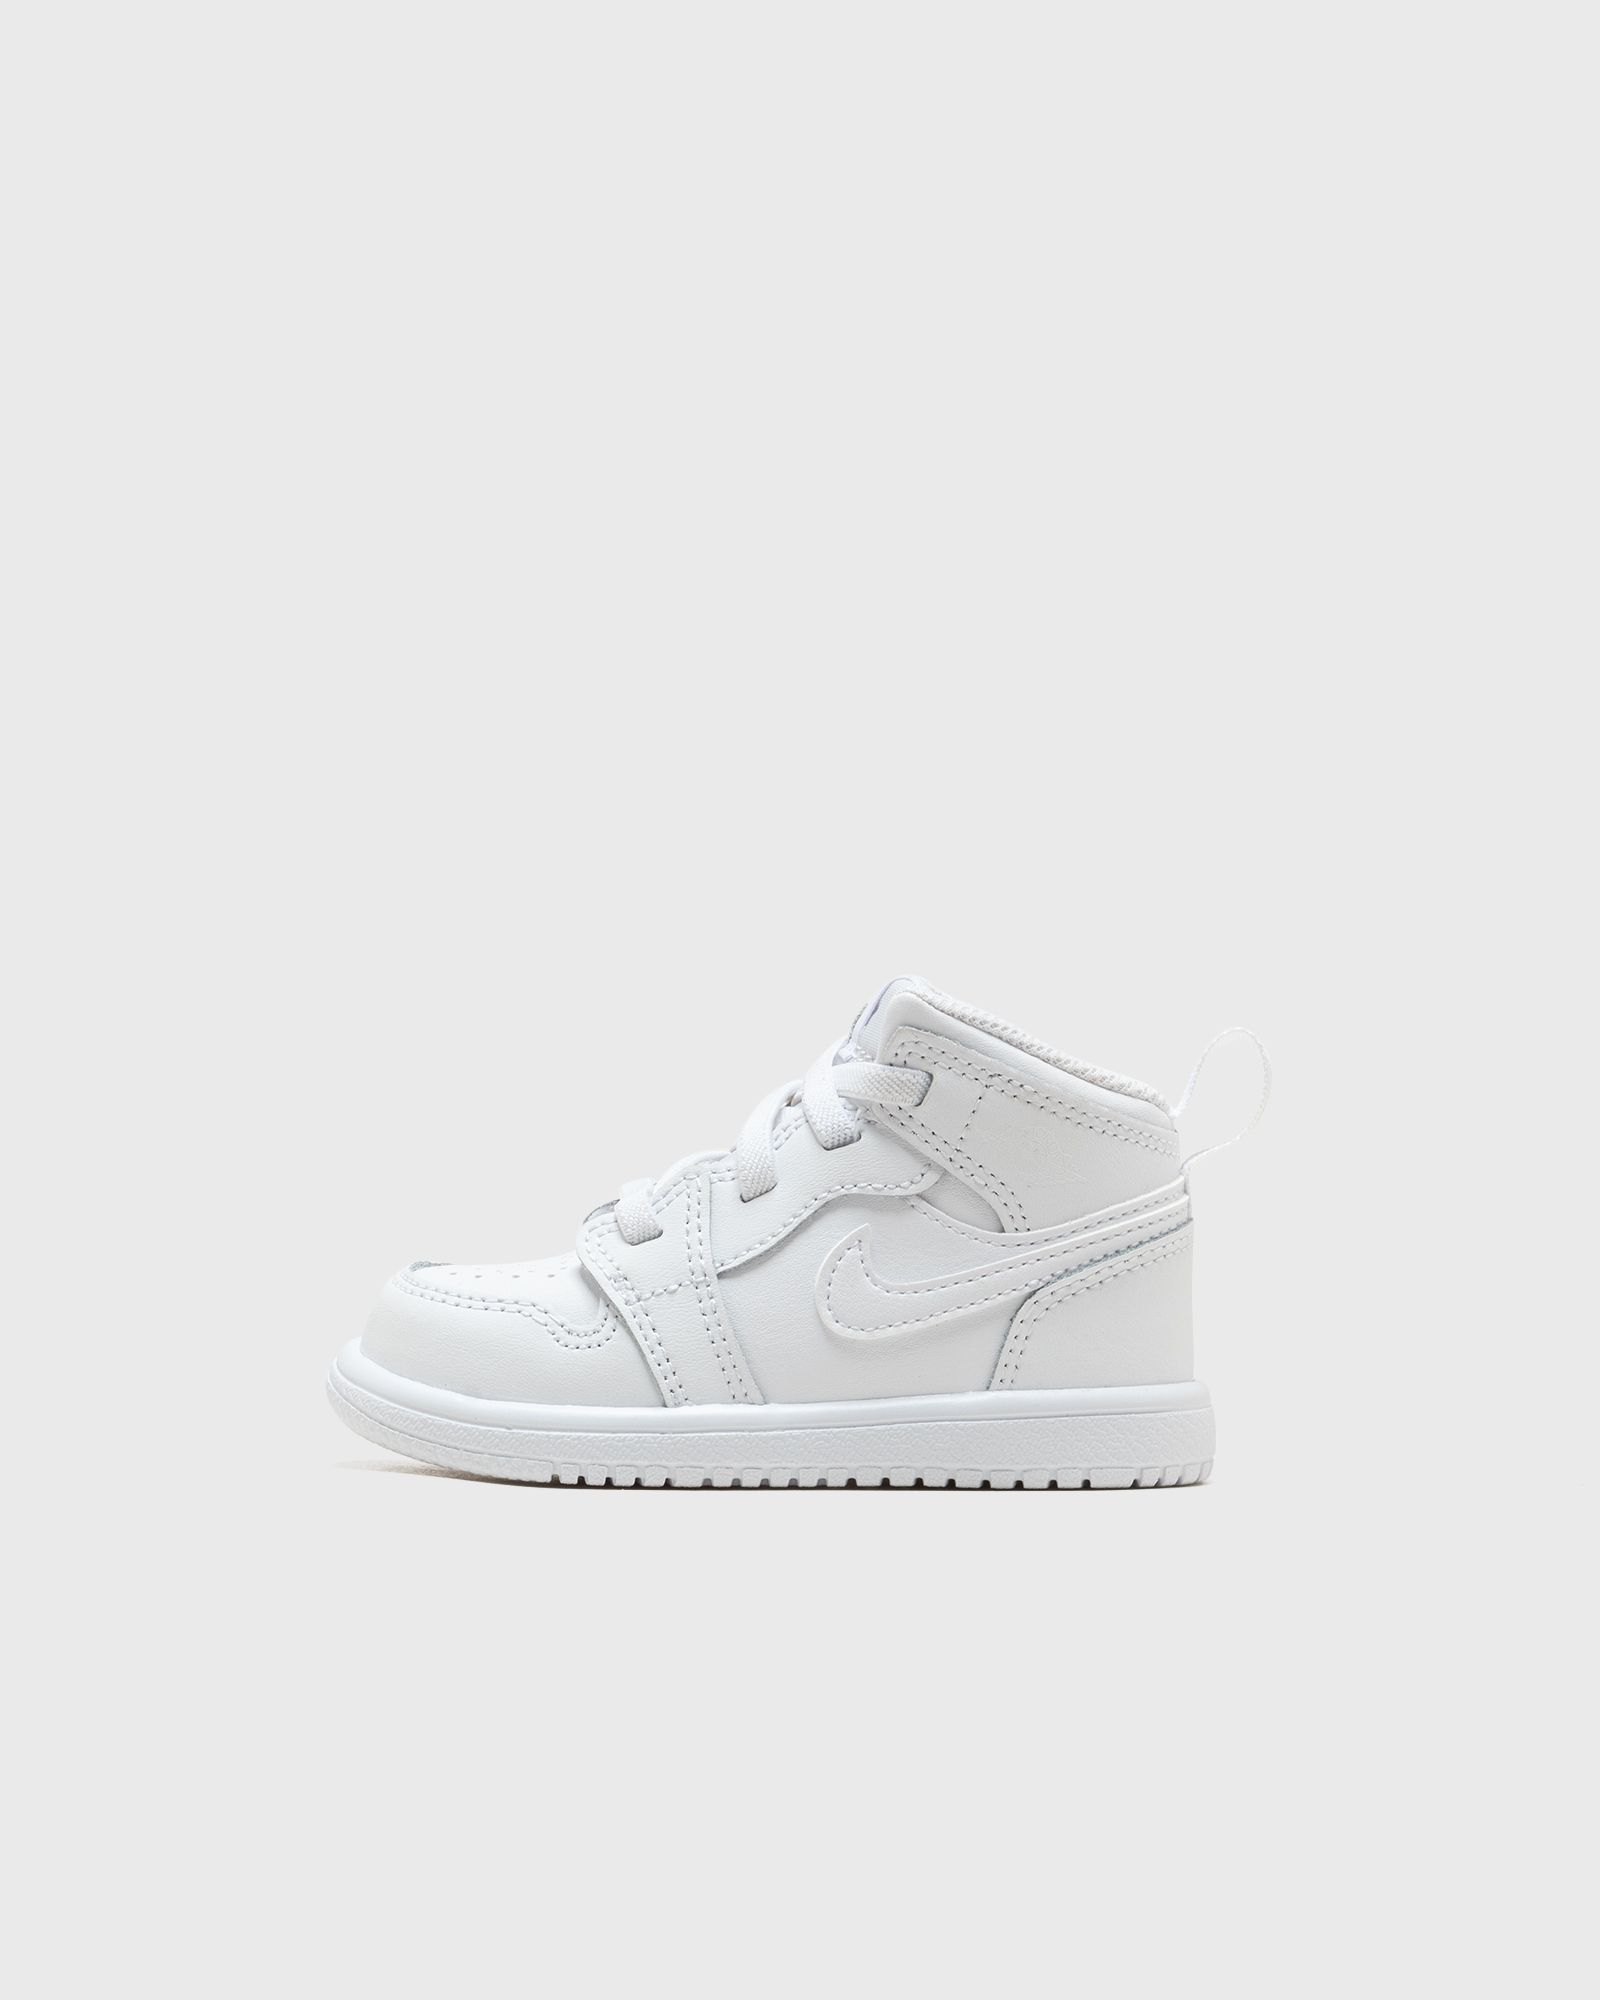 Jordan - 1 mid alt (td)  sneakers white in größe:27